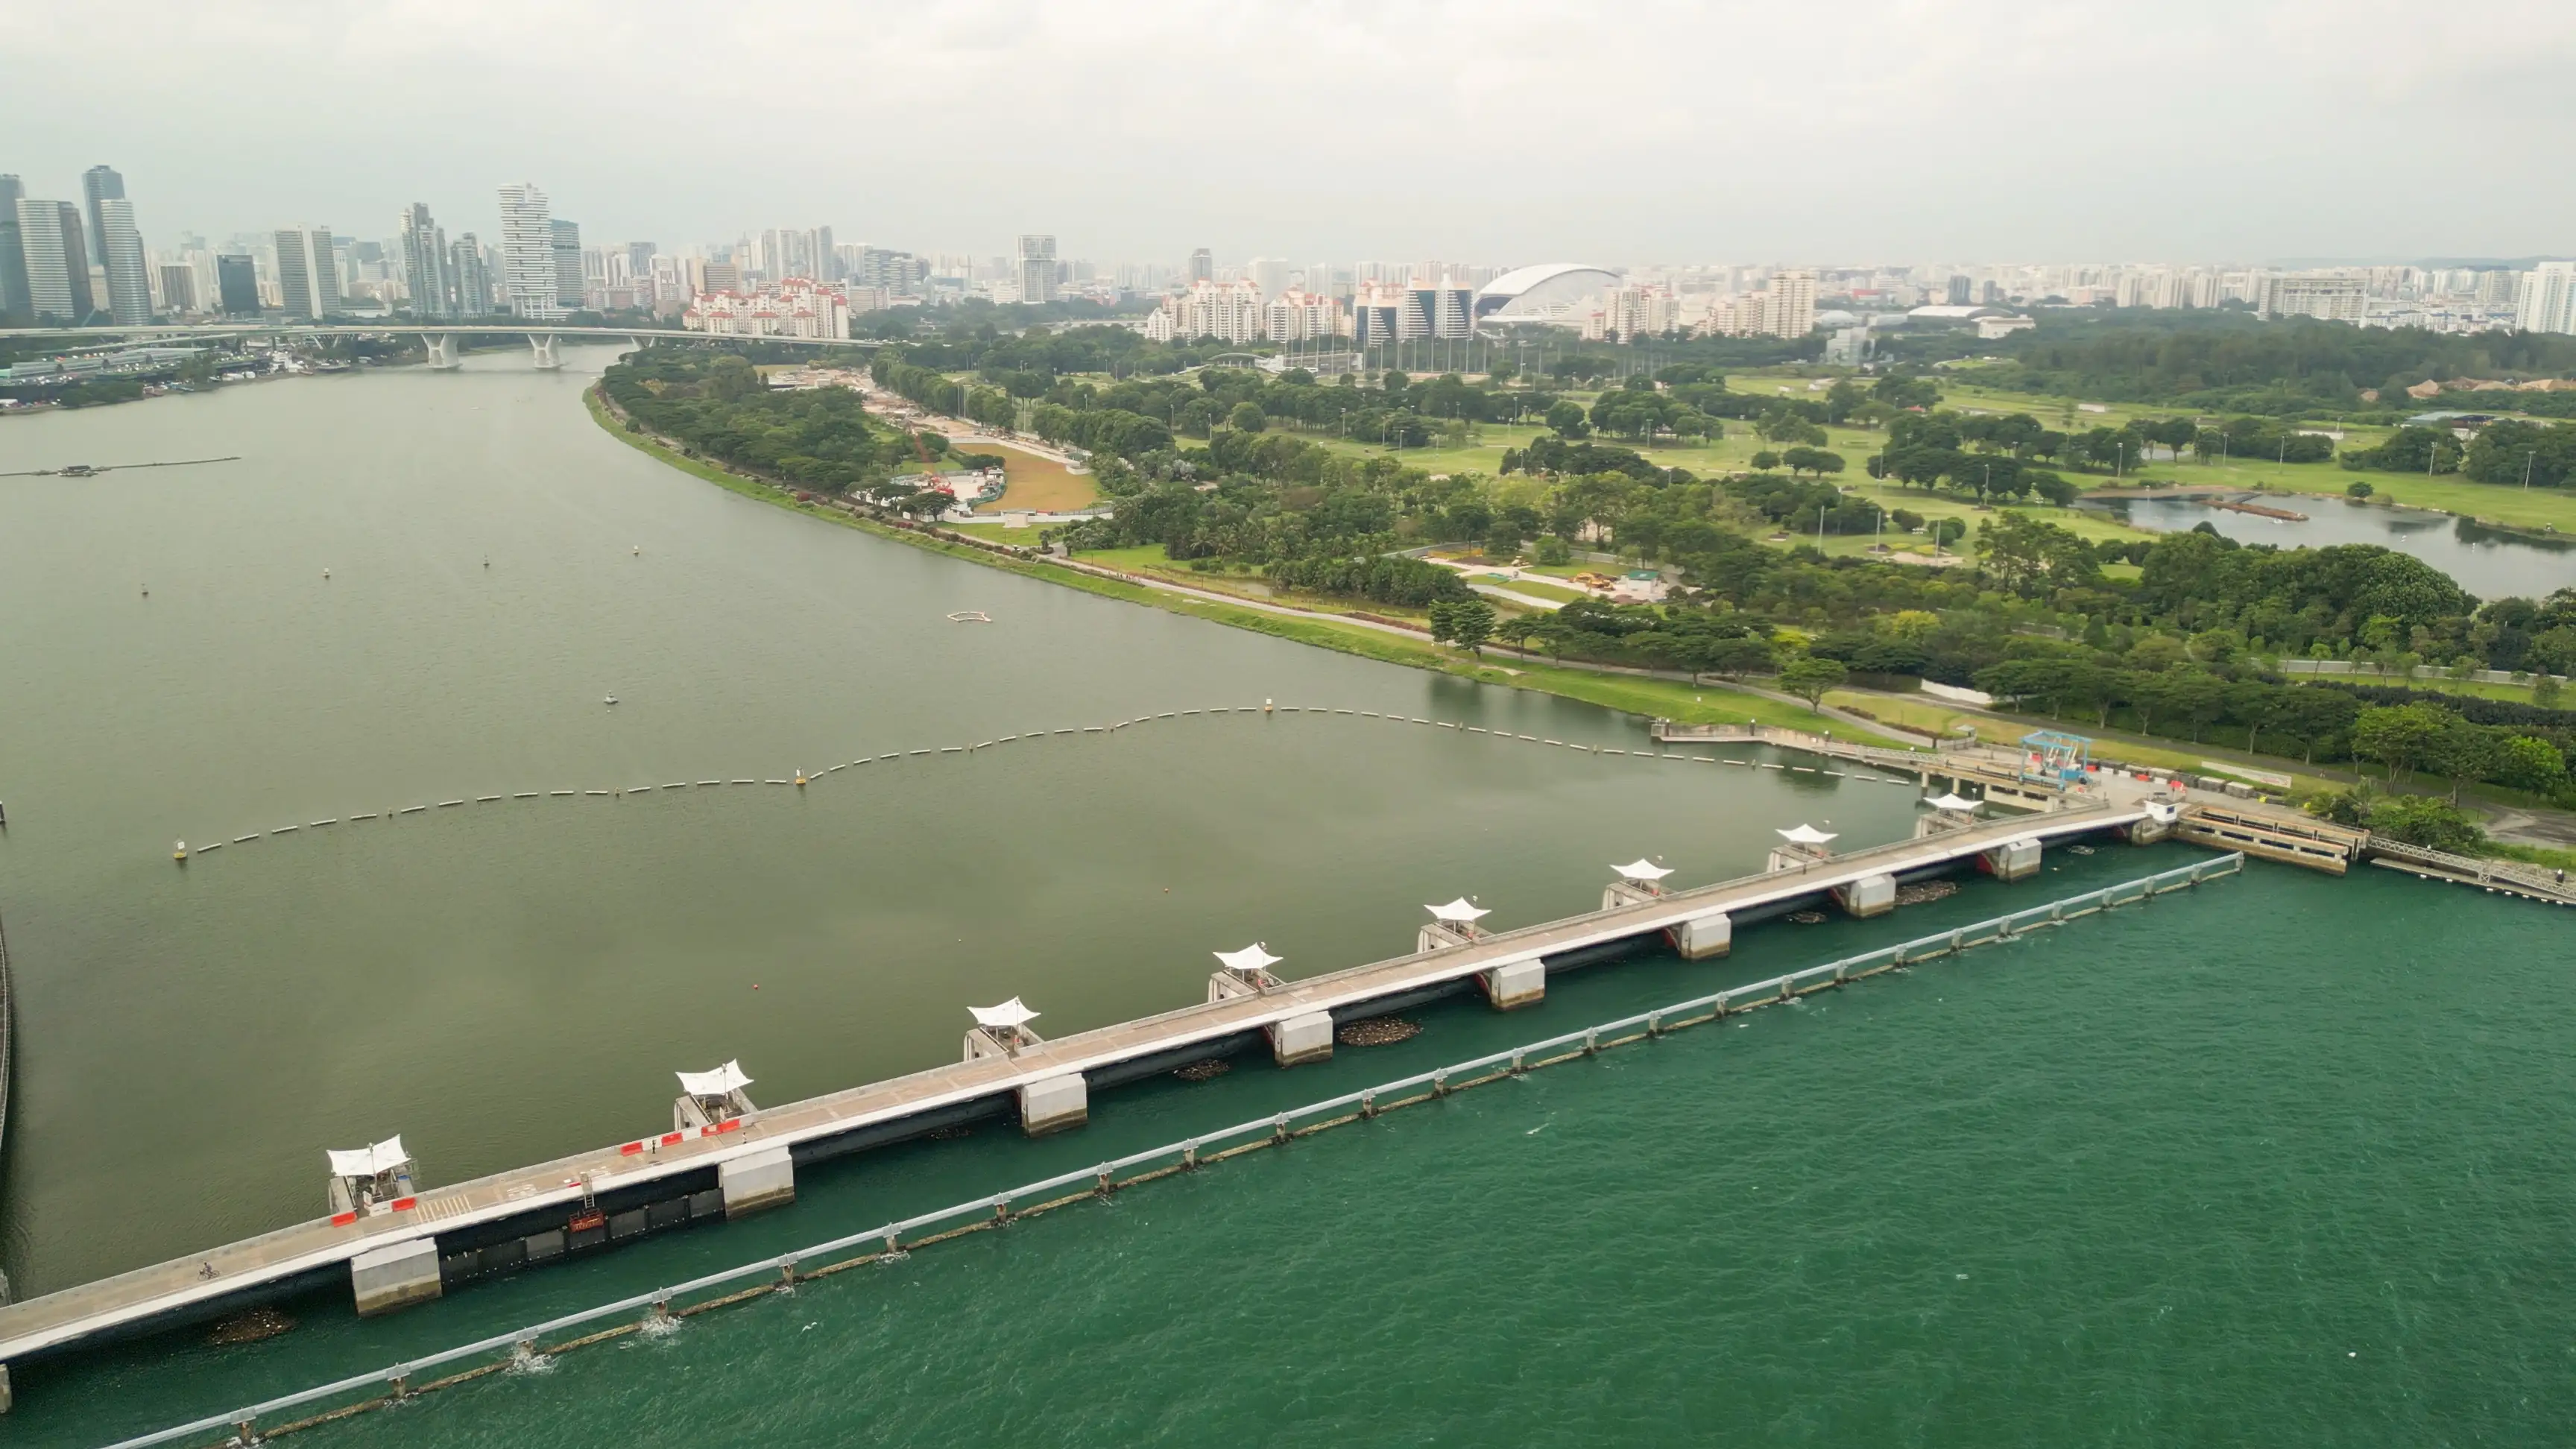 Marina Barrage, Singapore: Aerial view of cityscape and coastline